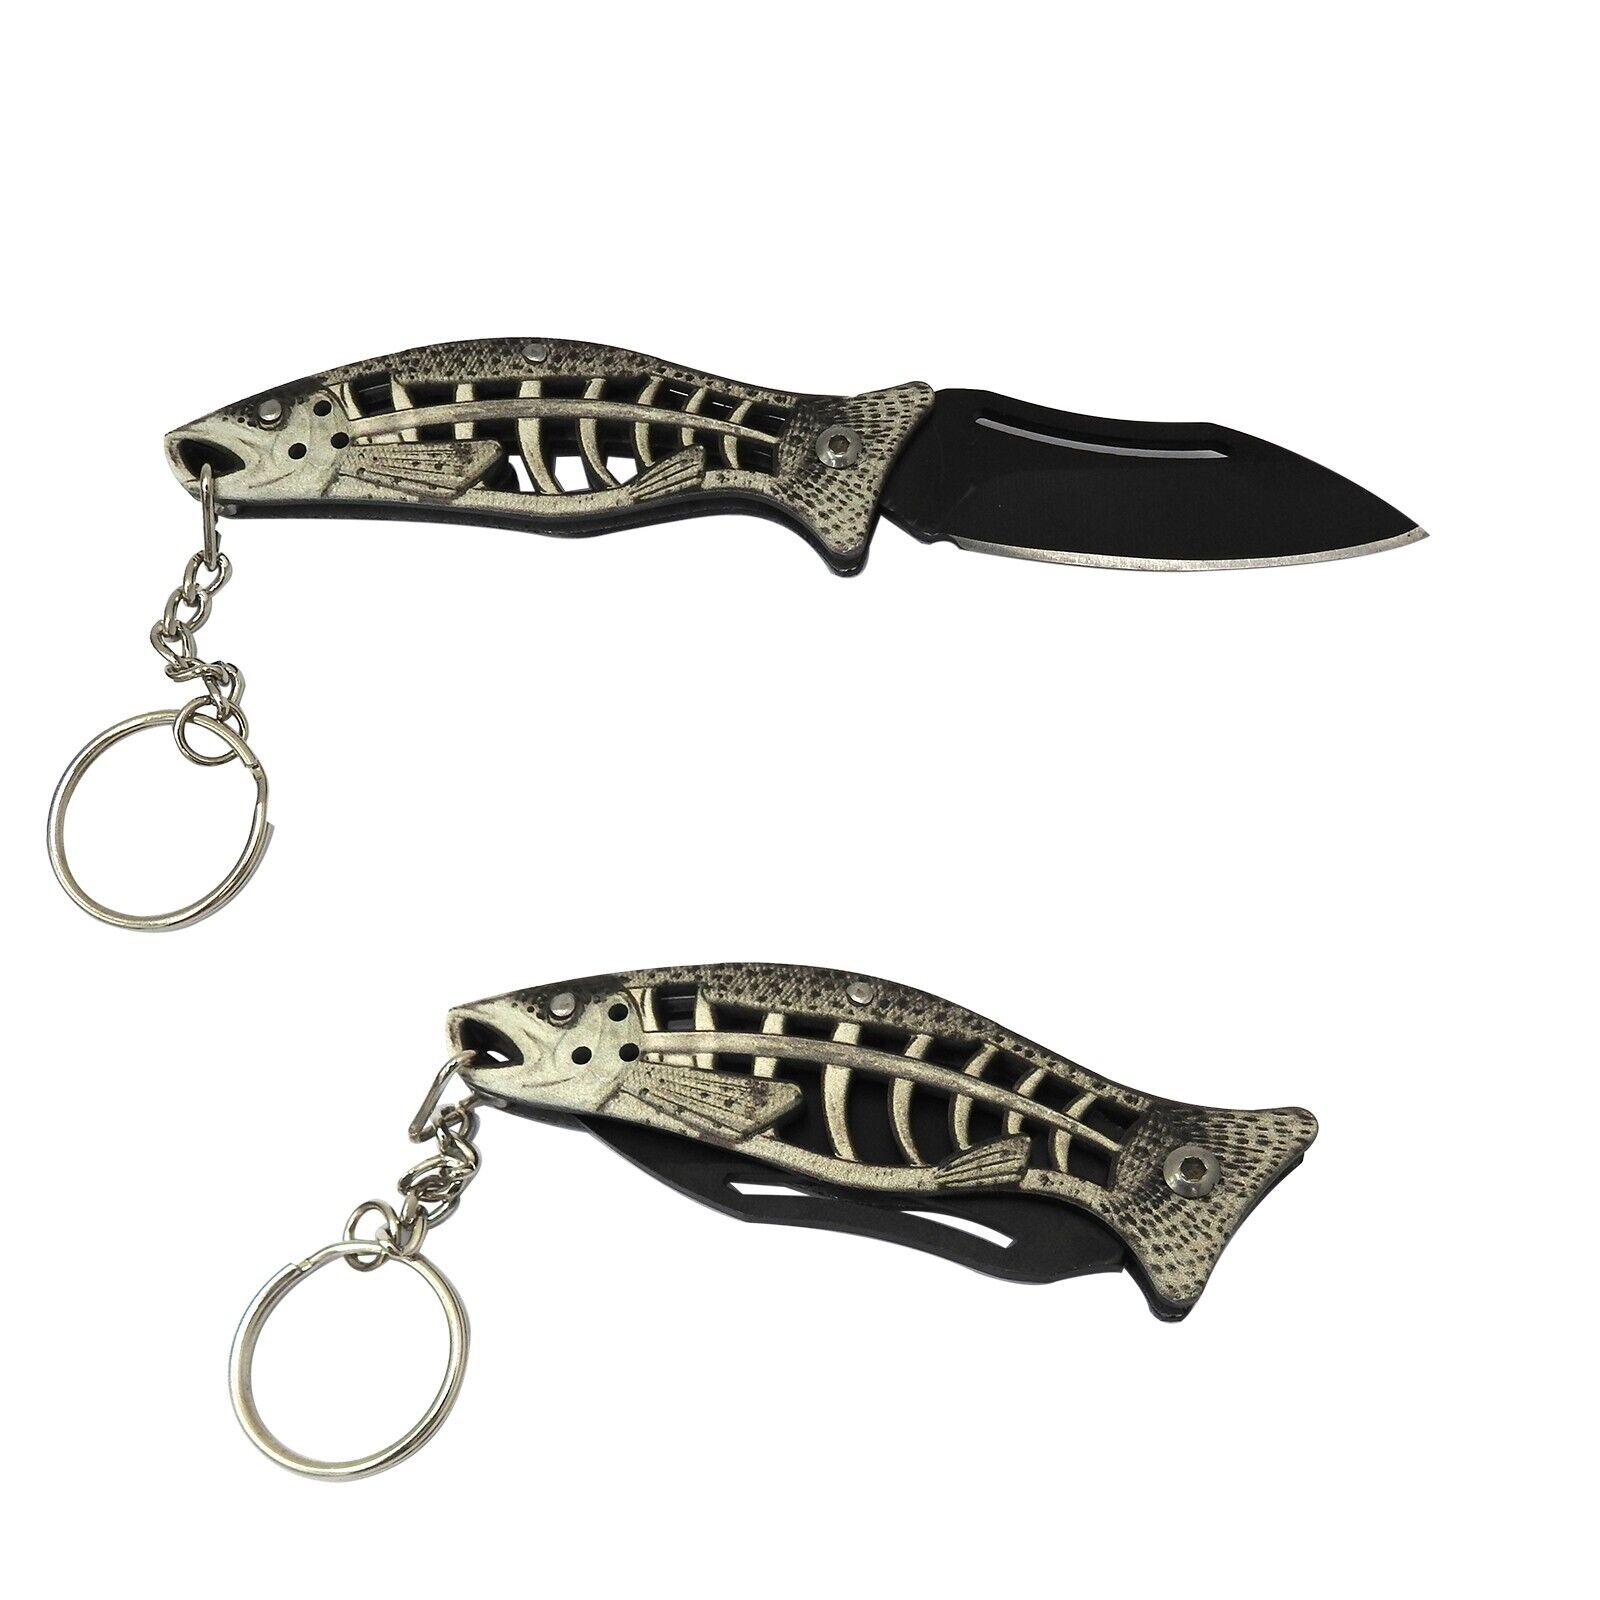 Art Fish shaped sheath hollow folding knife Beautiful holiday lover gifts Stainl